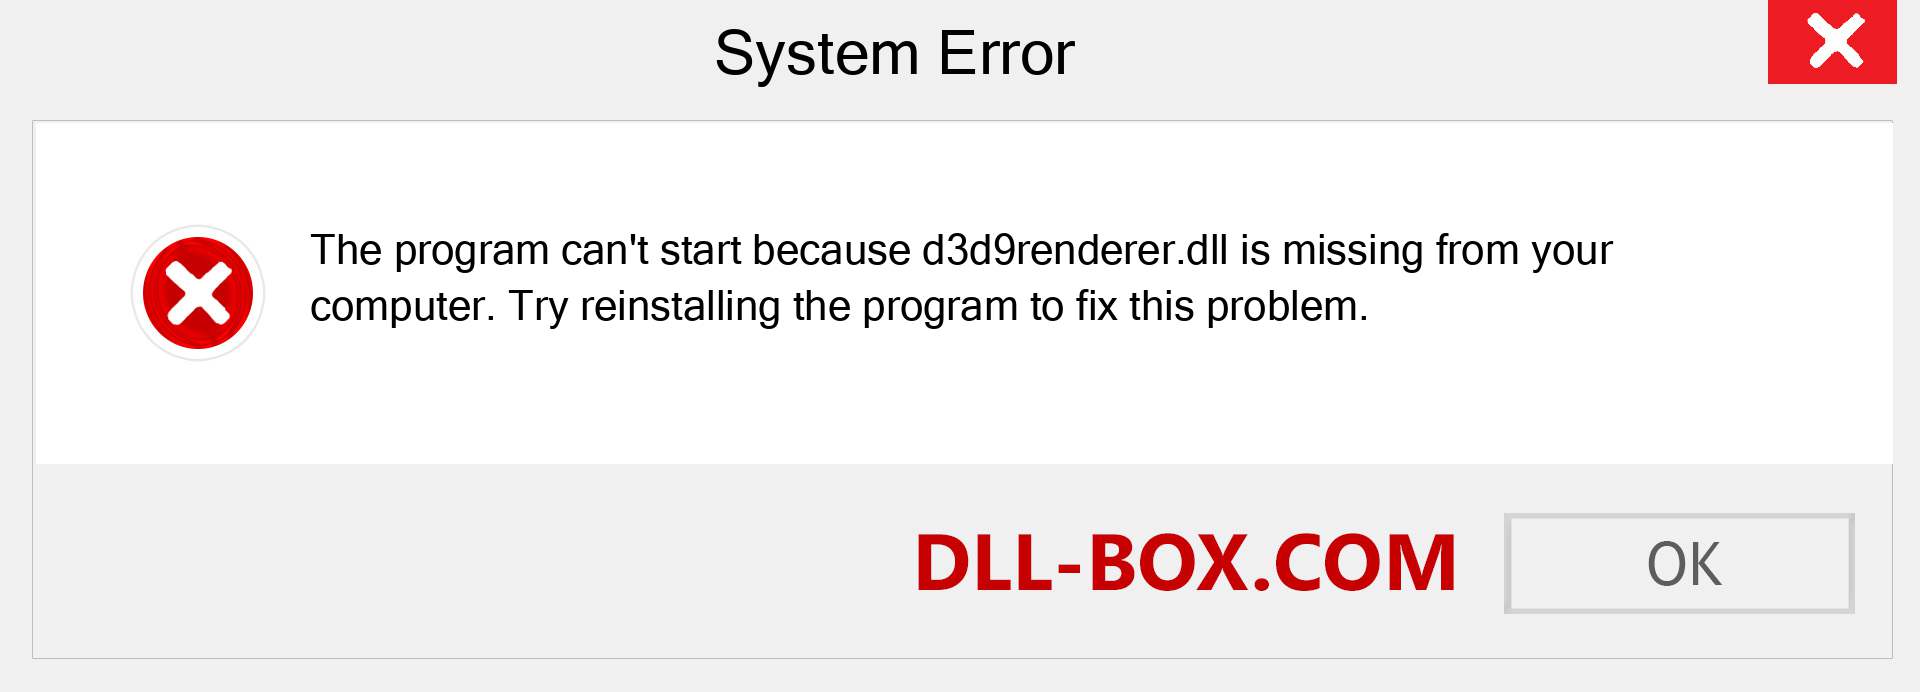  d3d9renderer.dll file is missing?. Download for Windows 7, 8, 10 - Fix  d3d9renderer dll Missing Error on Windows, photos, images